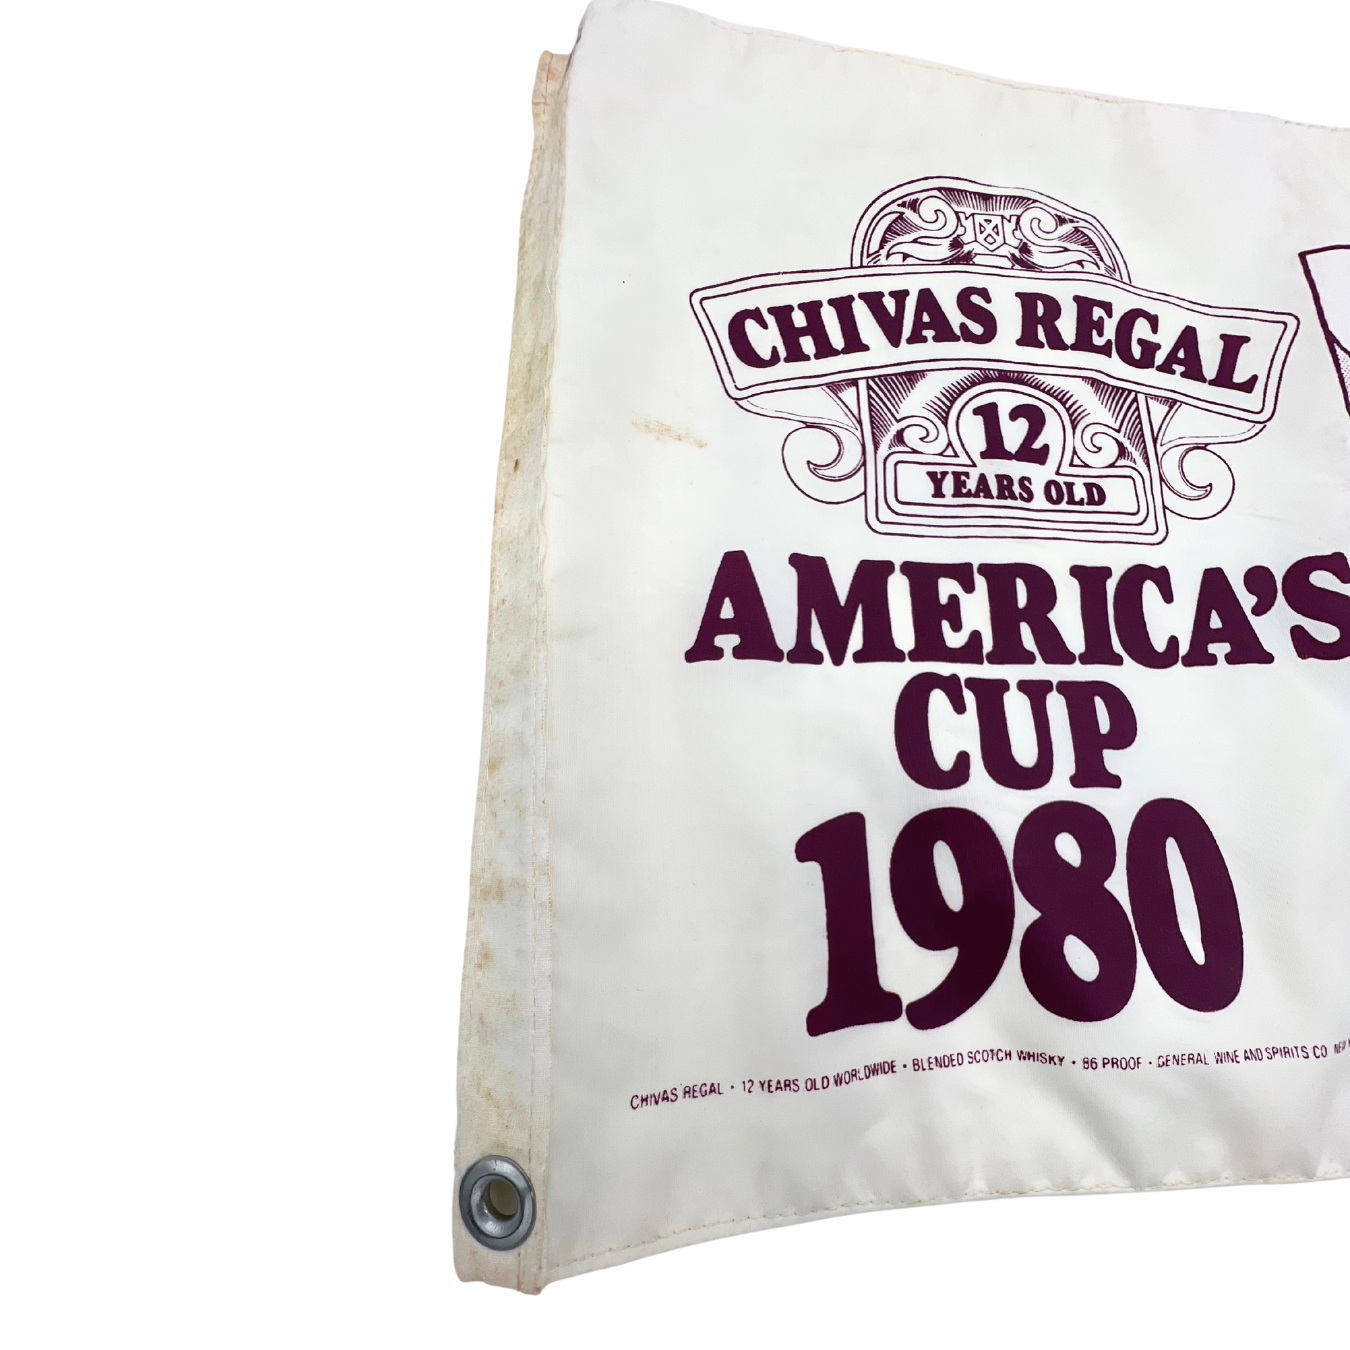 1980 Chivas Regal America's Cup burgee